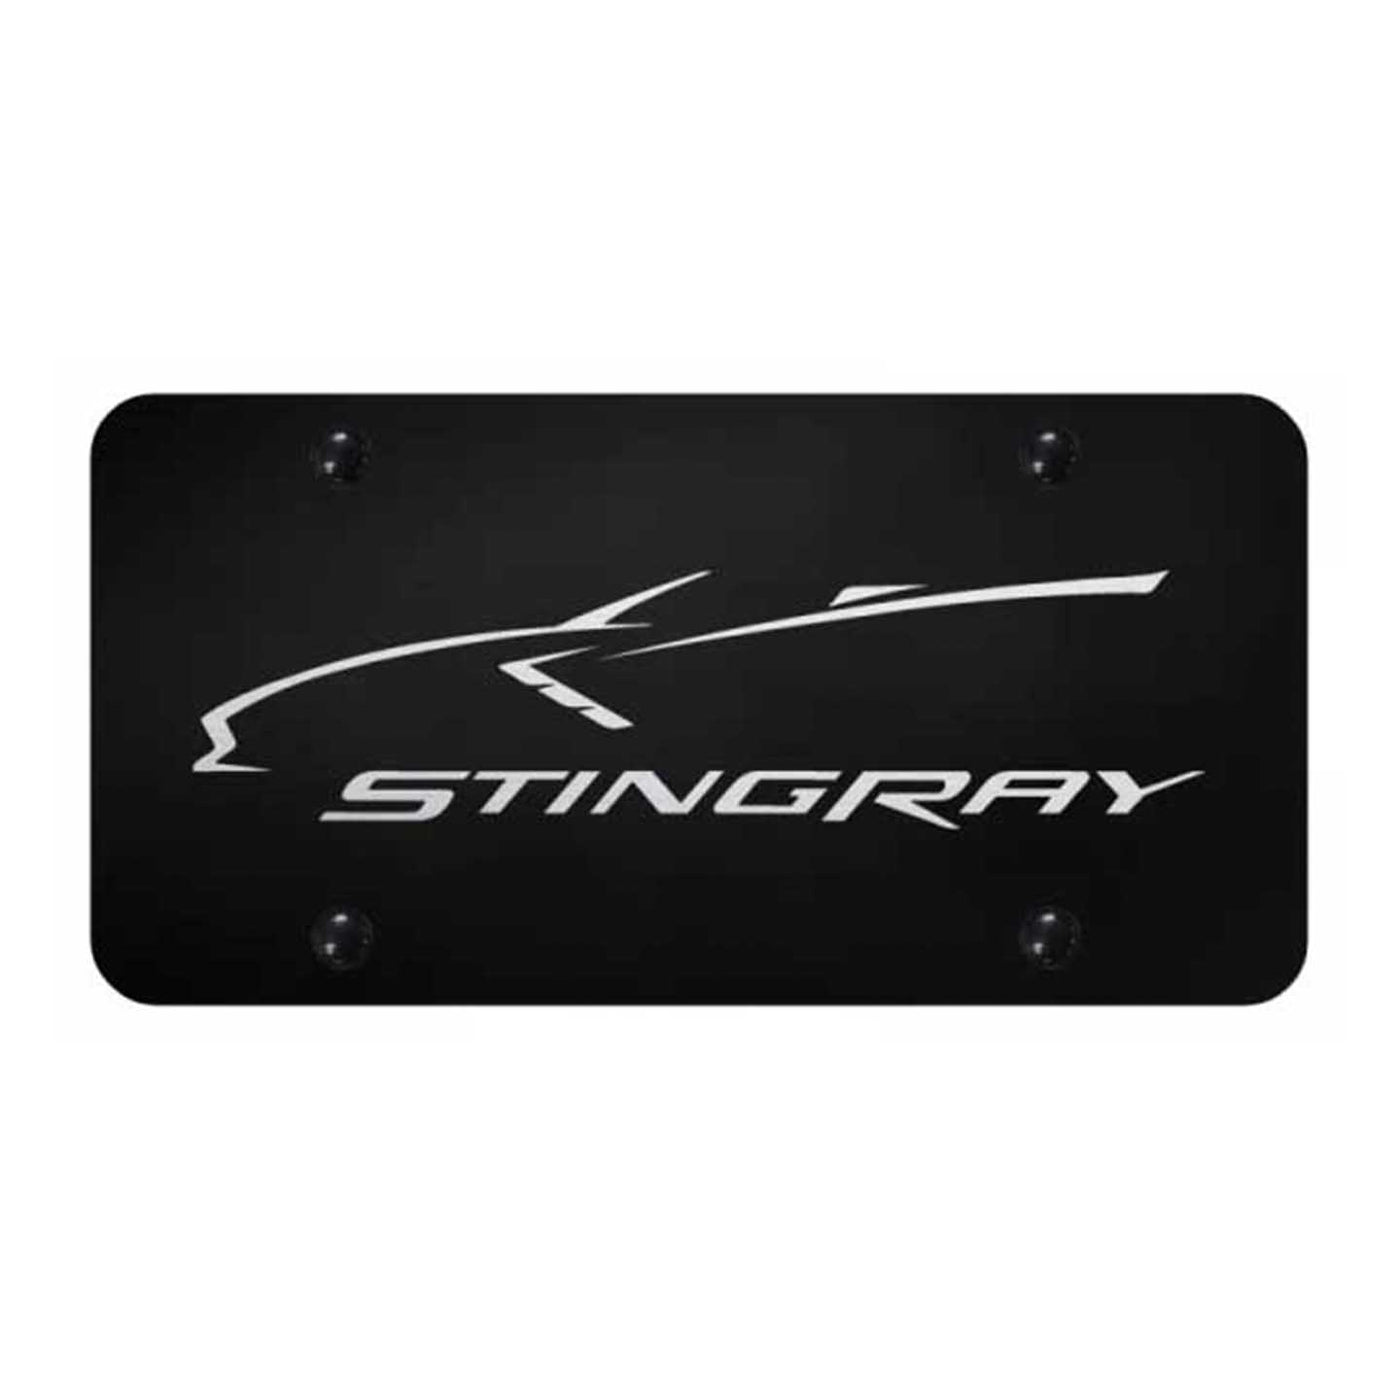 Corvette C7 Stingray Profile Plate - Laser Etched Black